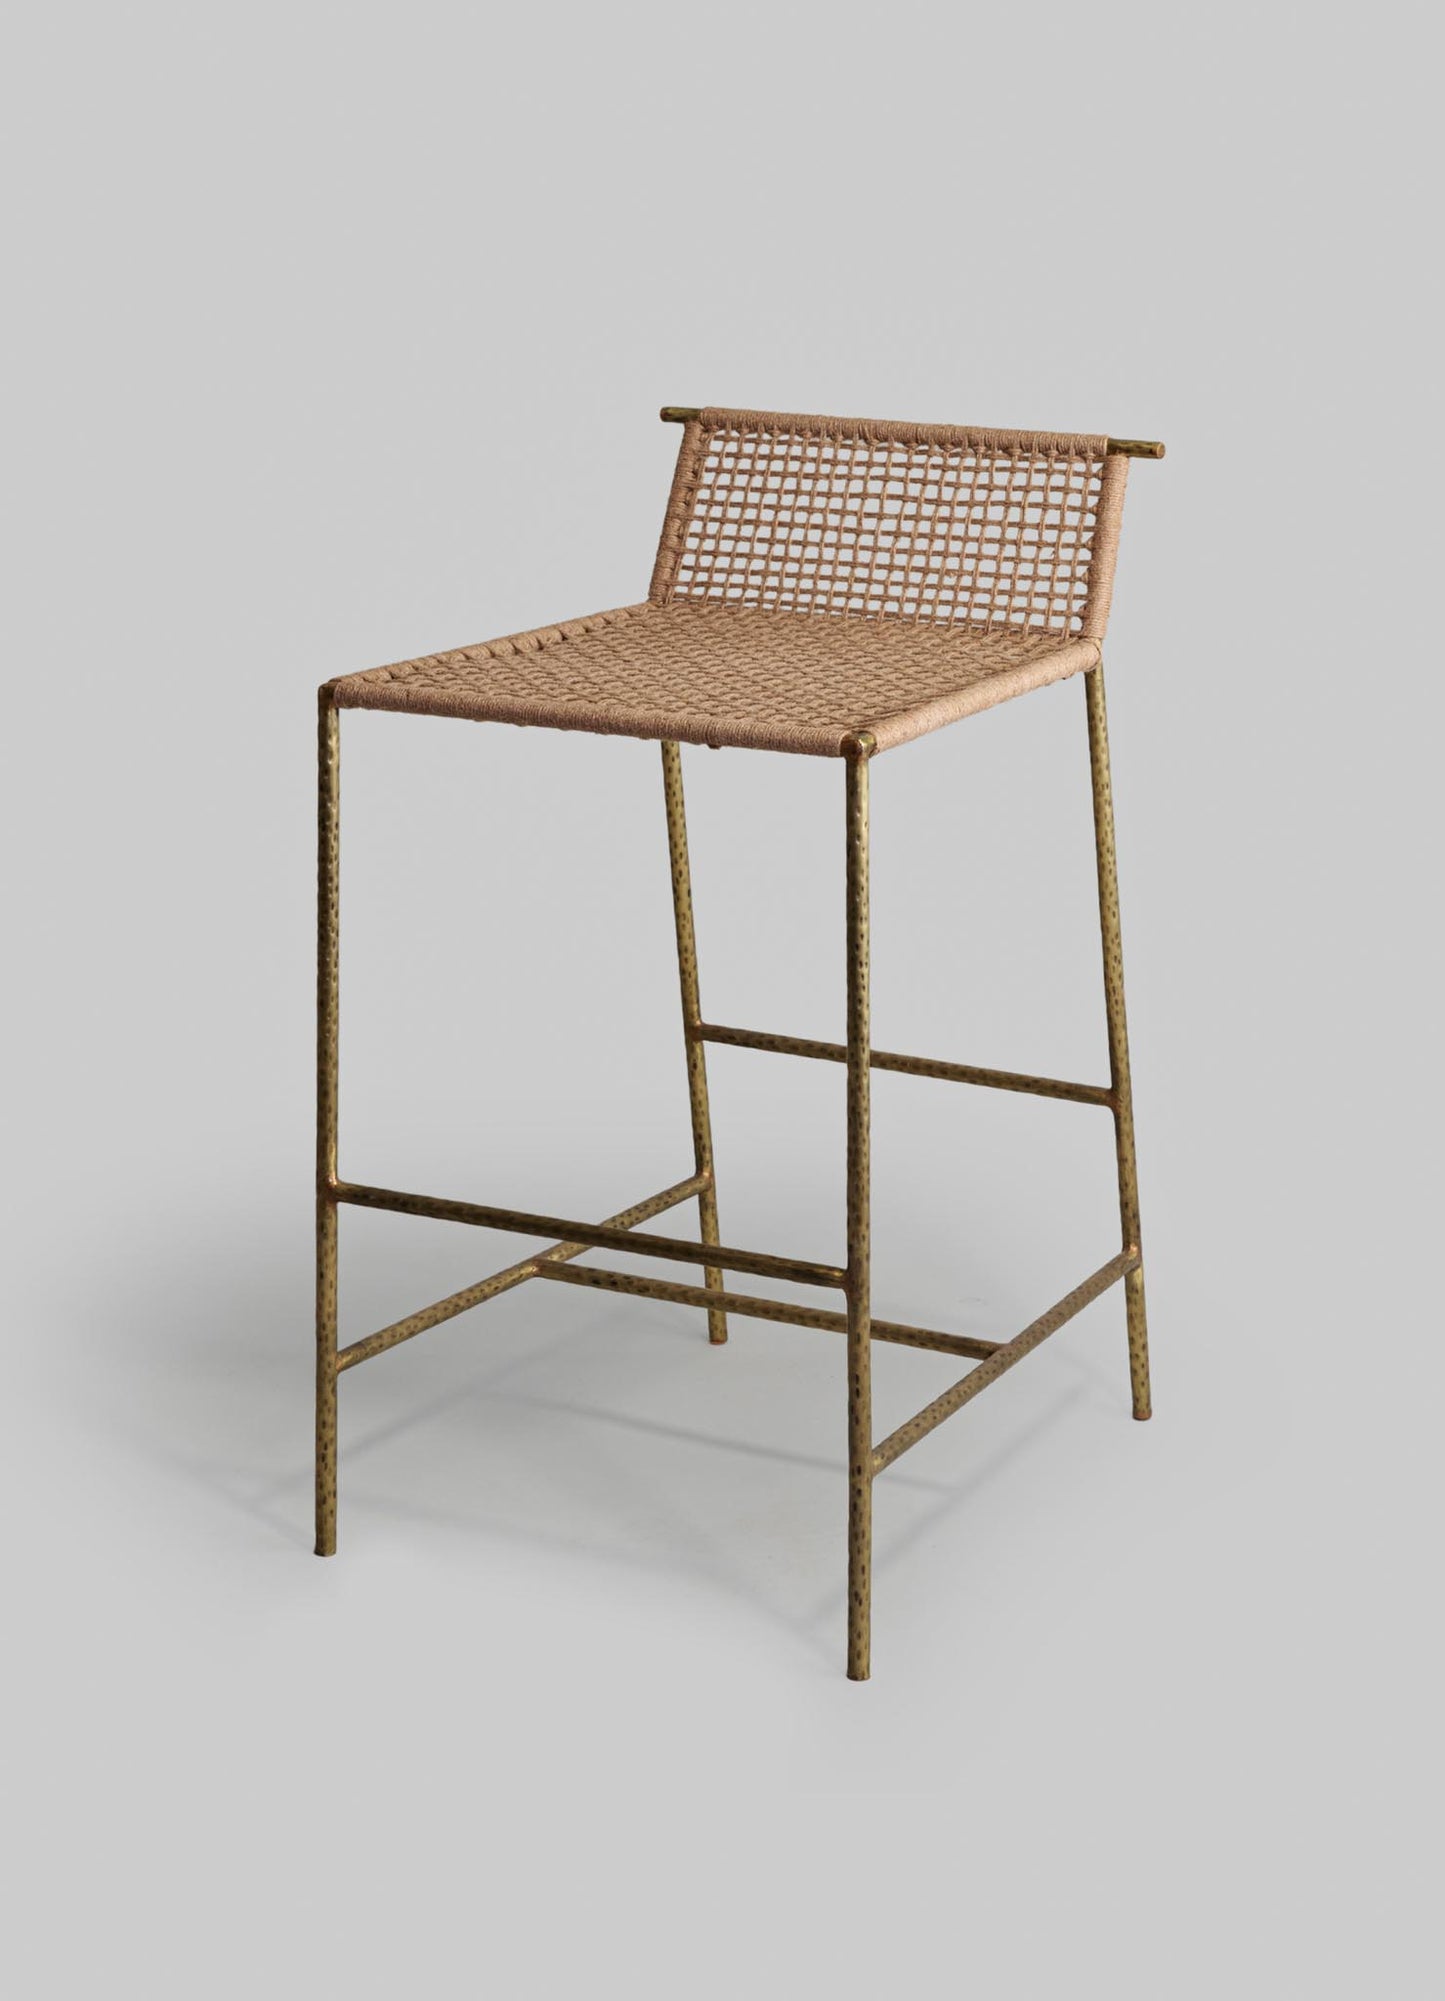 cane stool for living room